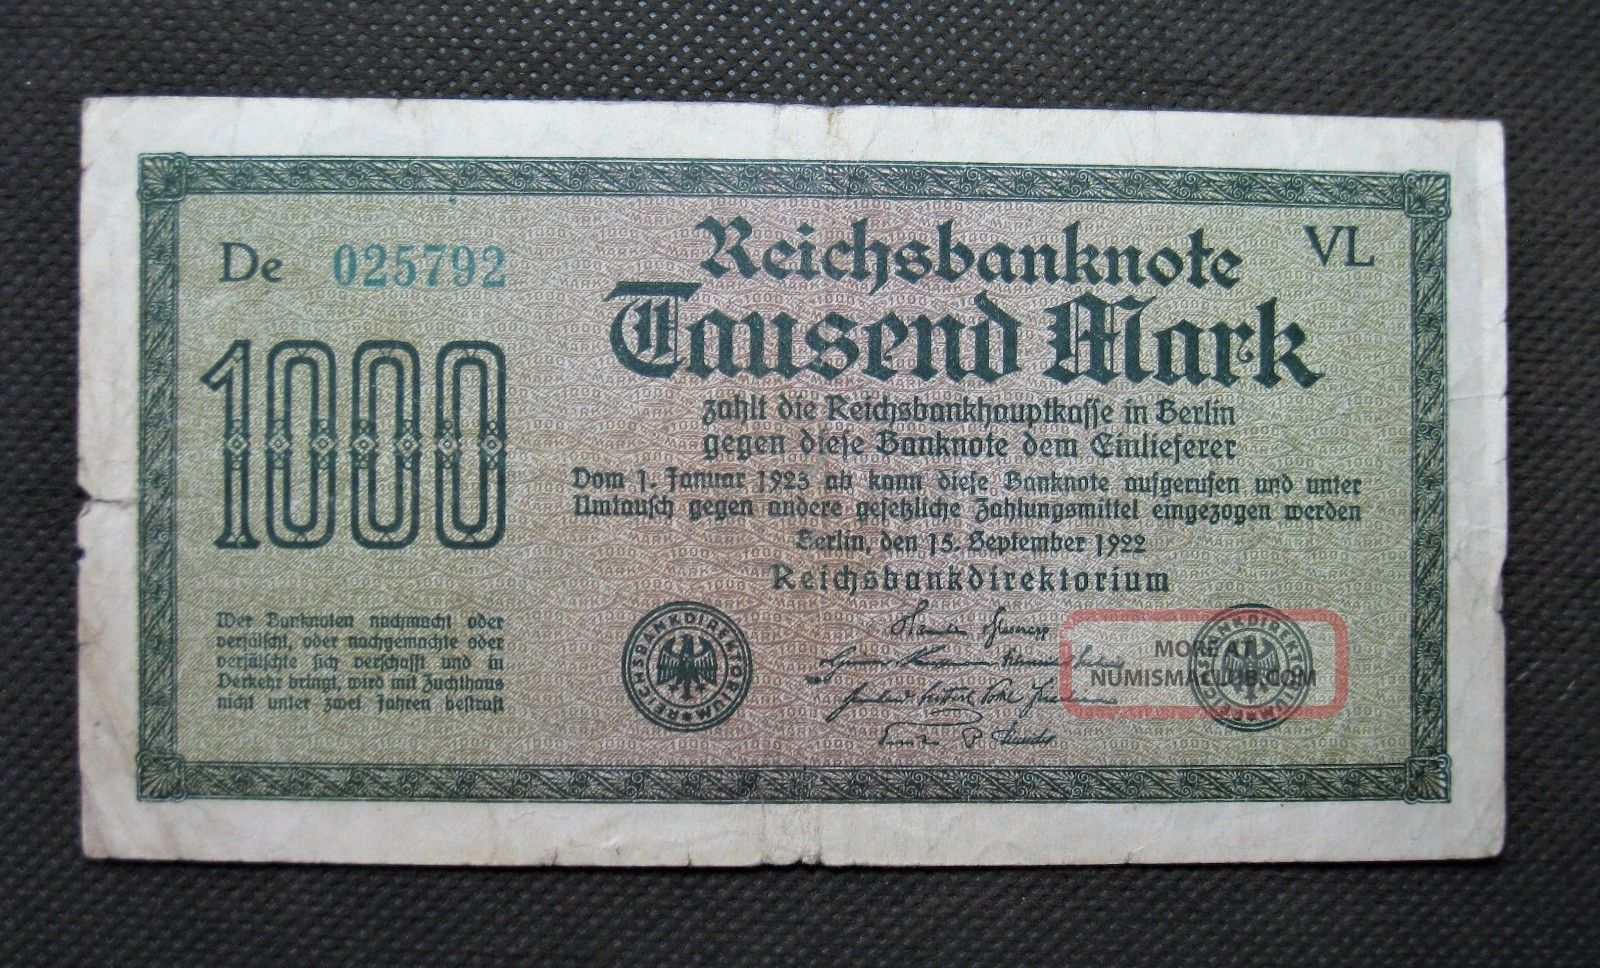 Old Bank Note Germany 1000 Reichsbanknote 1922 Weimar Republic De 025792 Vl Europe photo